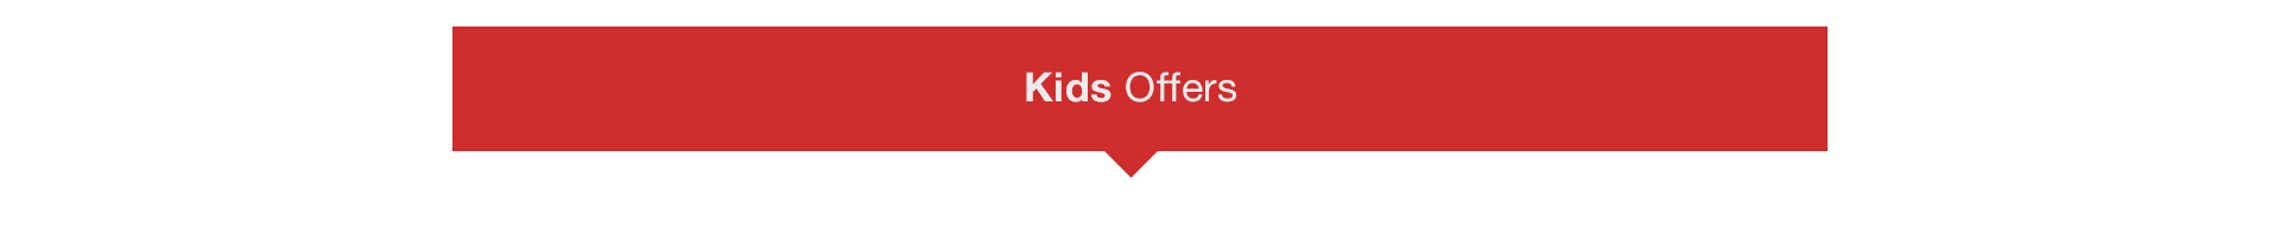 Kids Offers